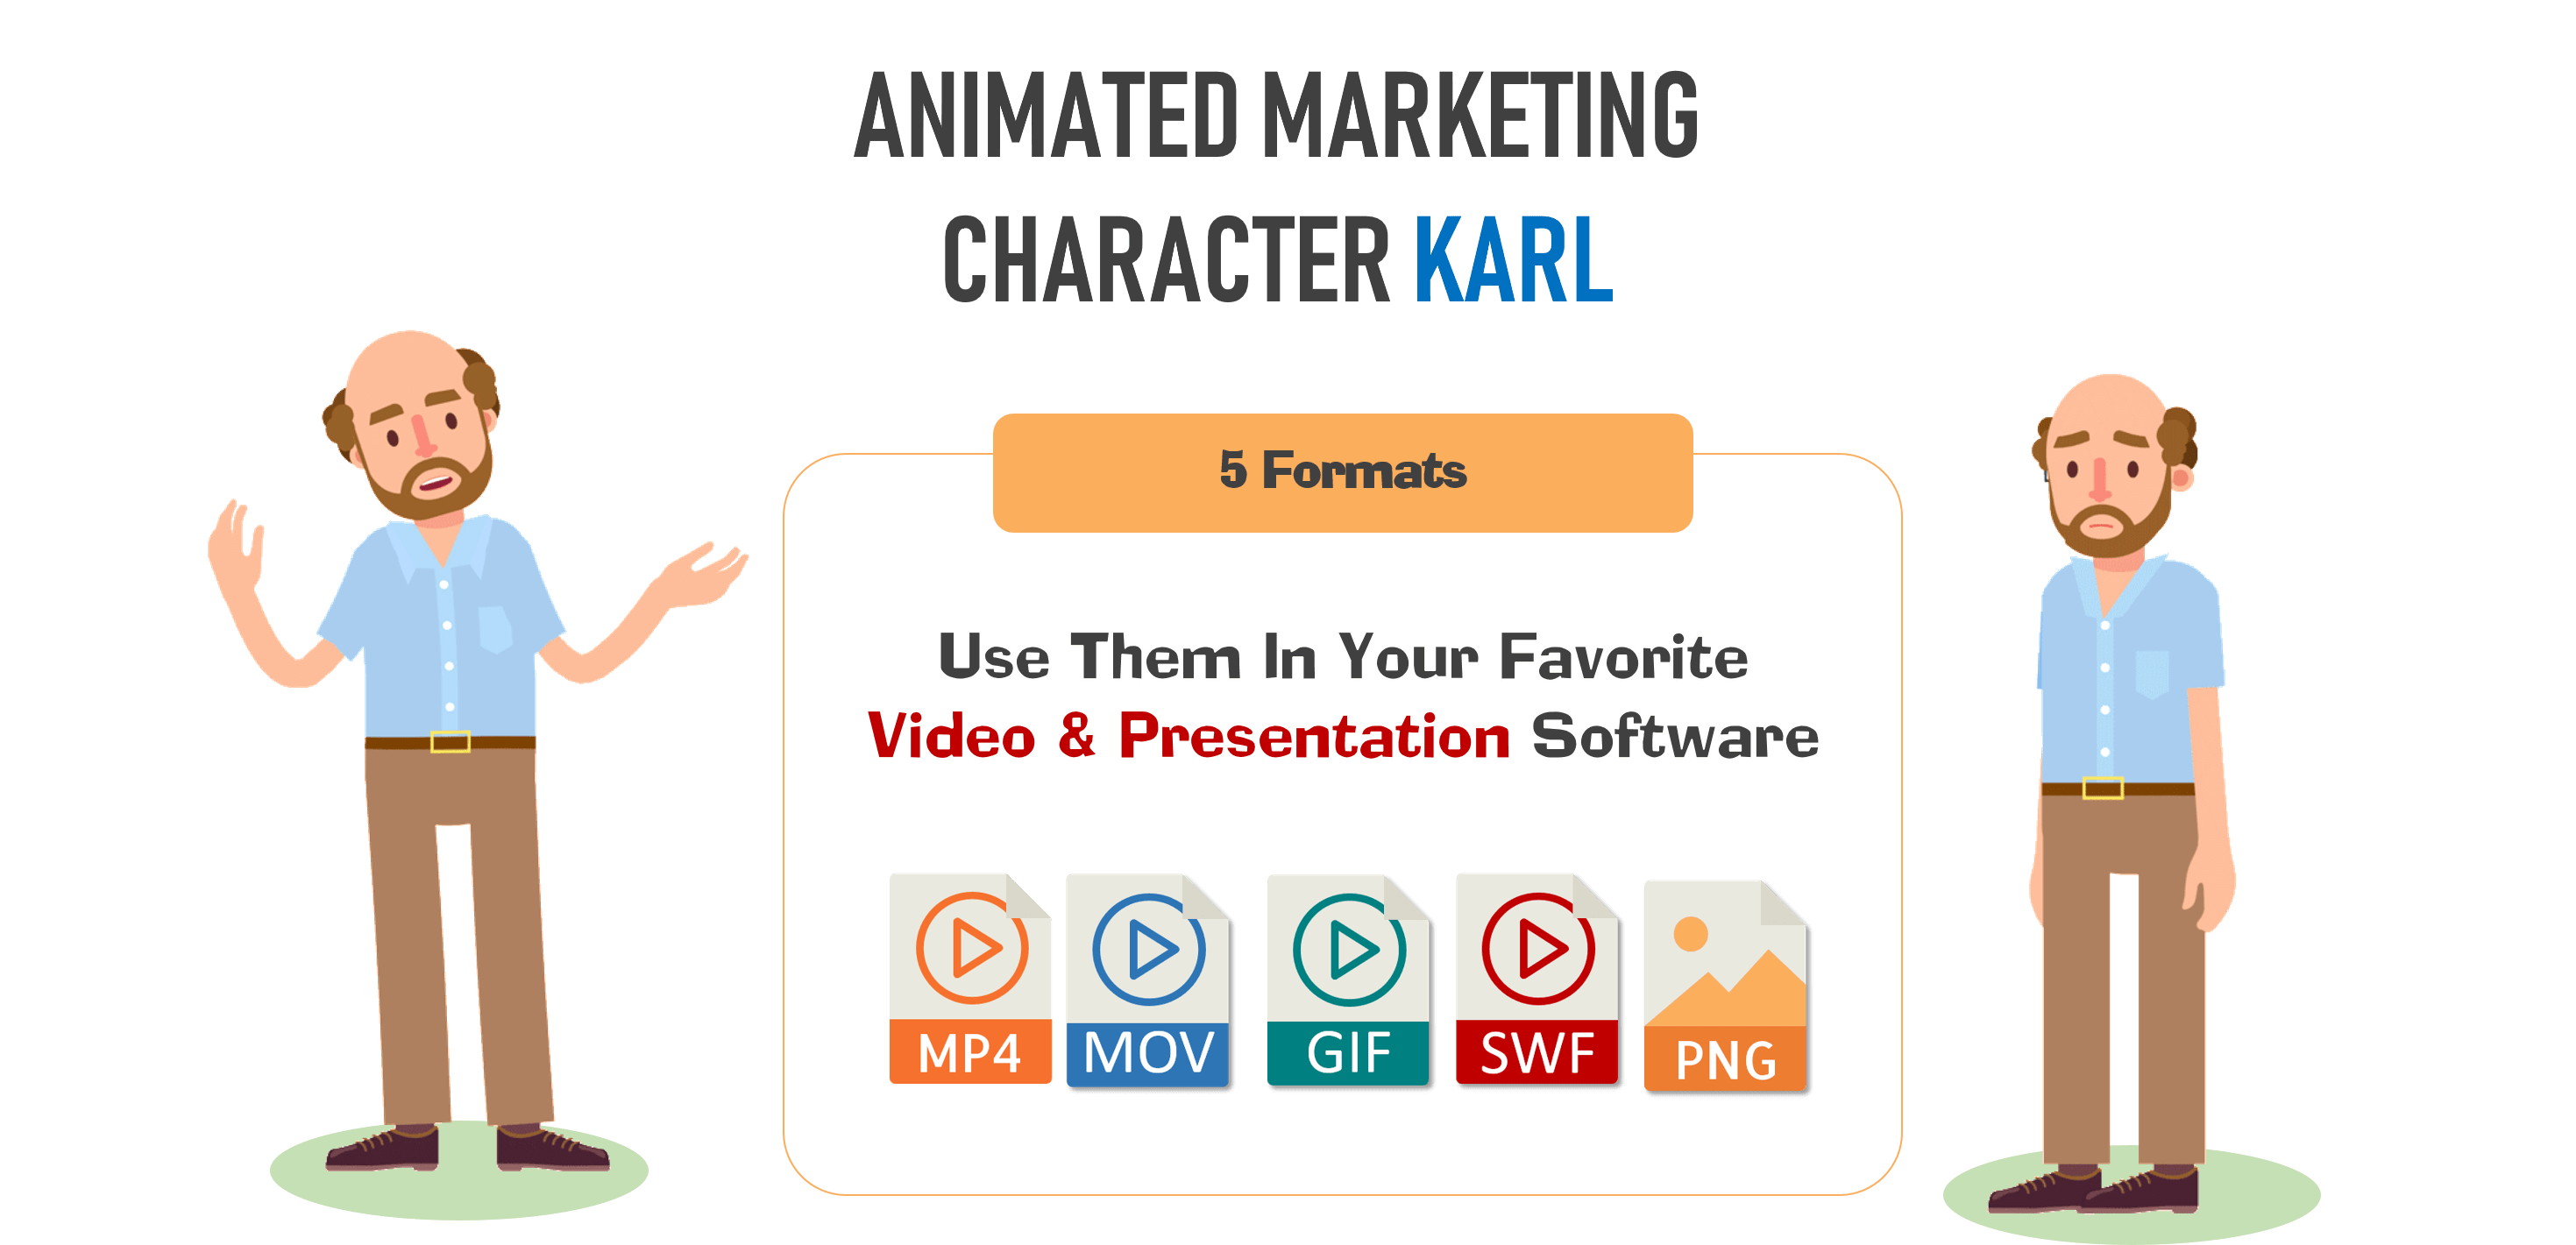 Marketing Character Karl